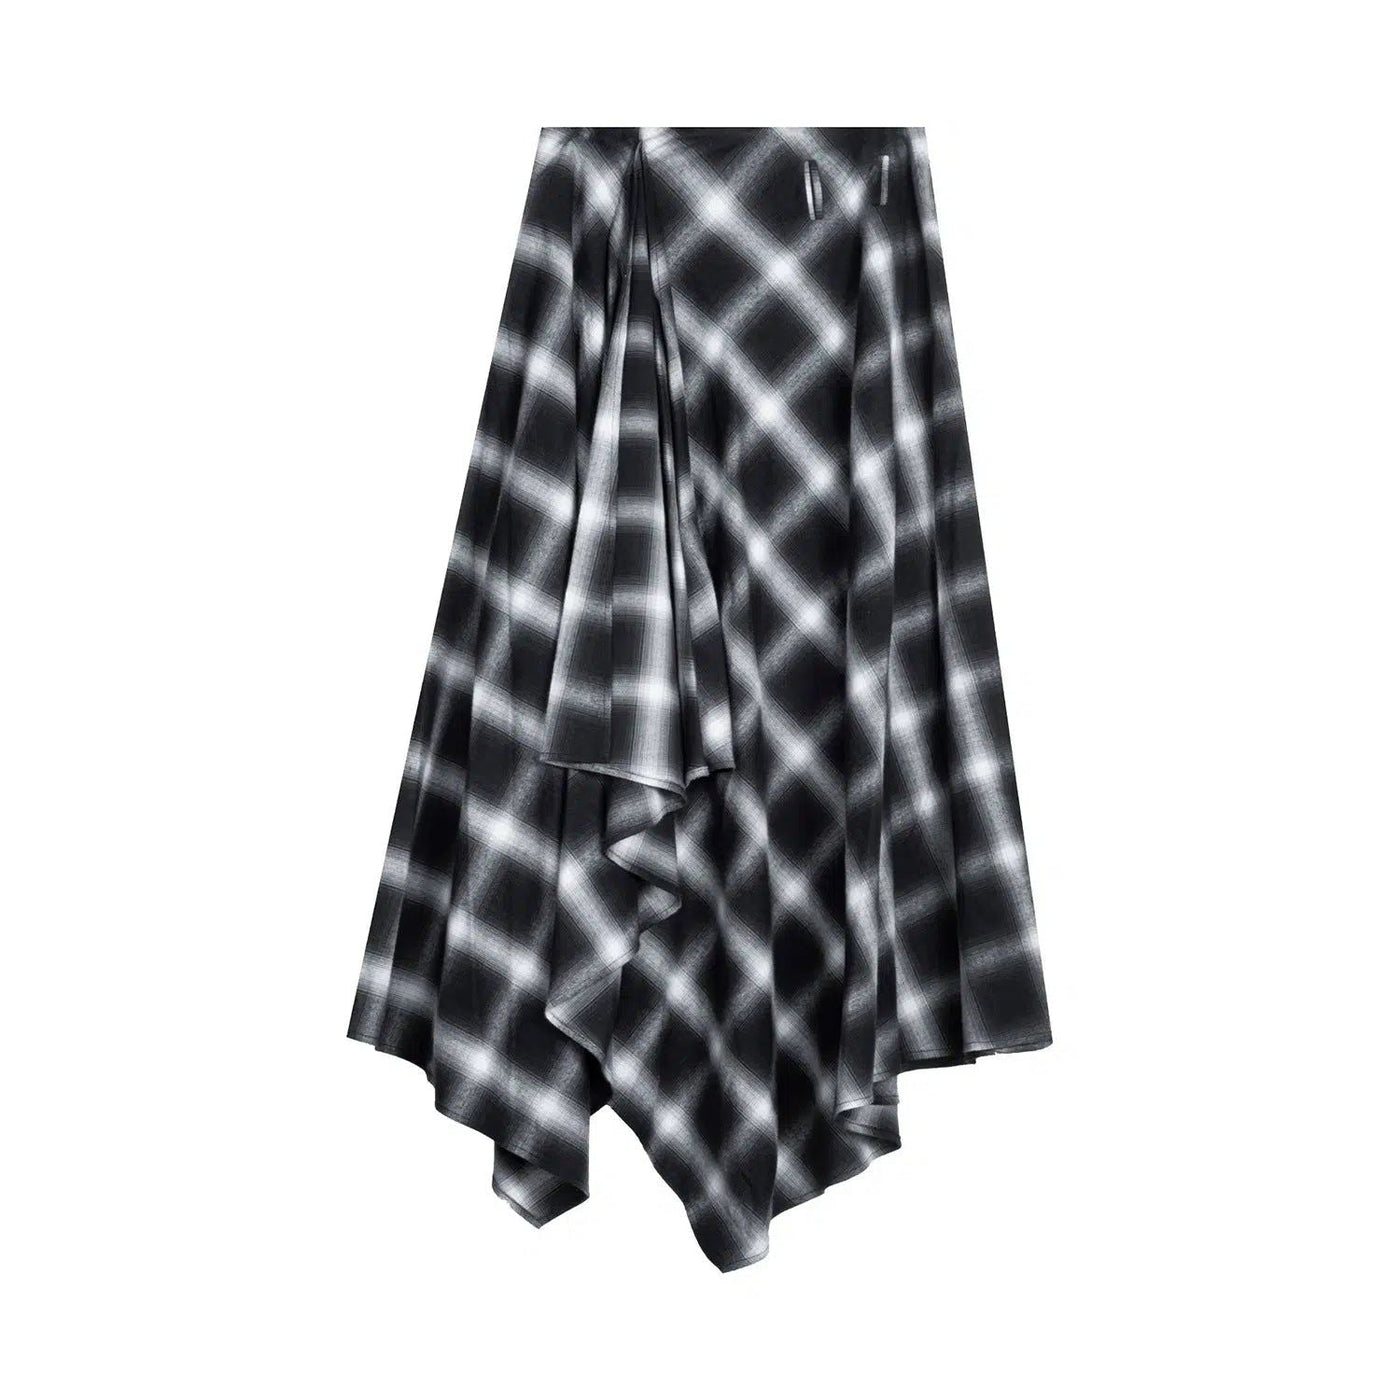 Drapey Folds Plaid Skirt Korean Street Fashion Skirt By Terra Incognita Shop Online at OH Vault